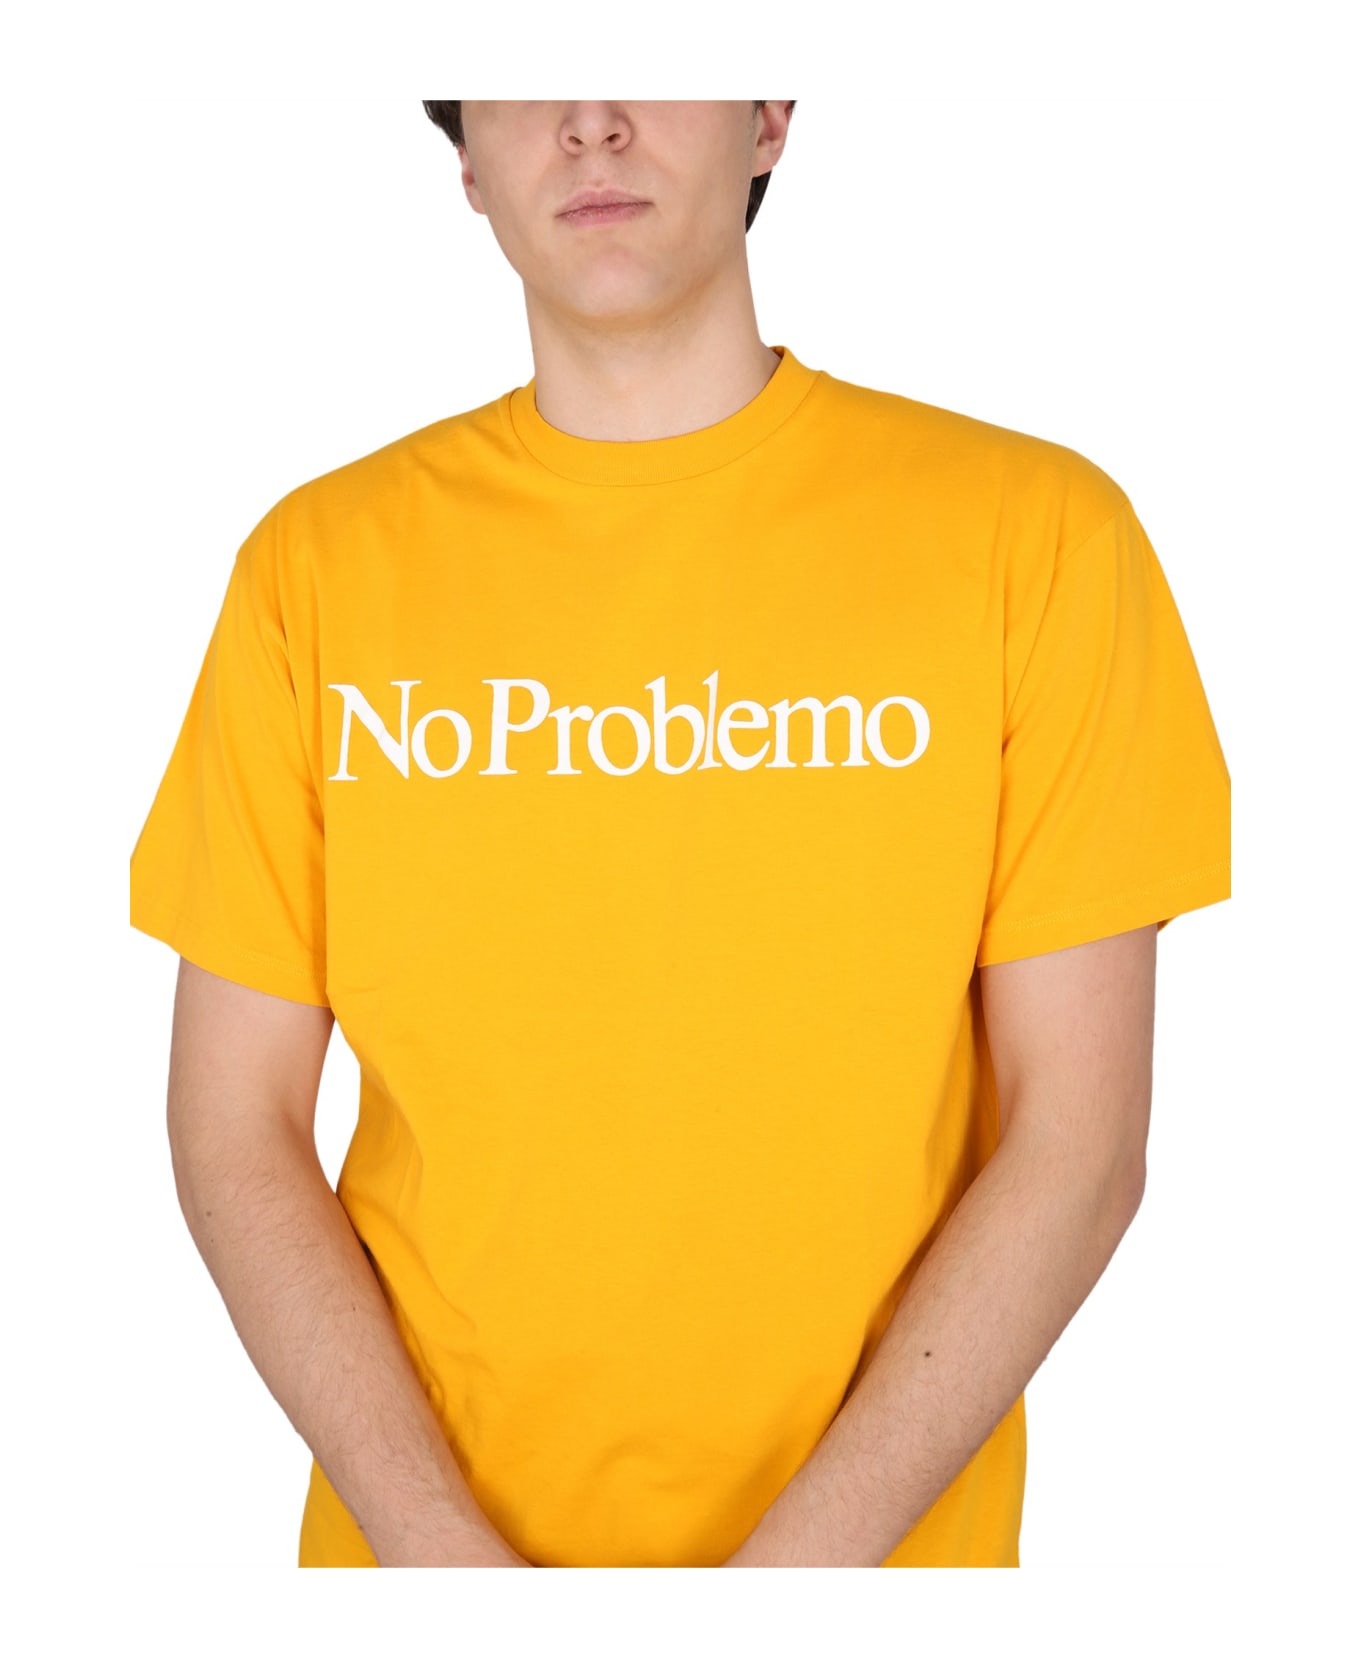 Aries T-shirt No Problemo - Ocra